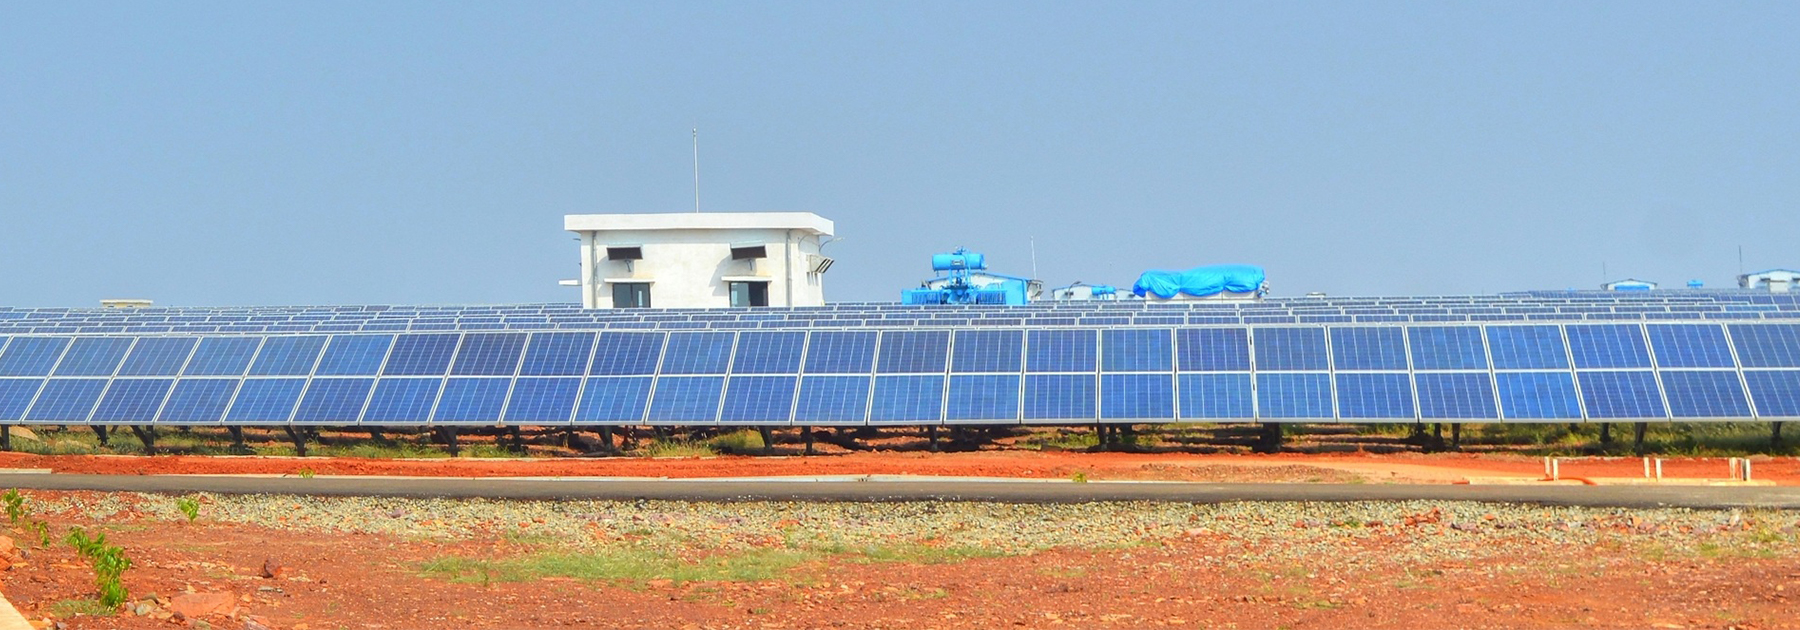 The Welspun Solar power plant outside of Bhagwanpura villiage, Neemuch. (Rahul Talreja, licensed under CC BY-SA 4.0)